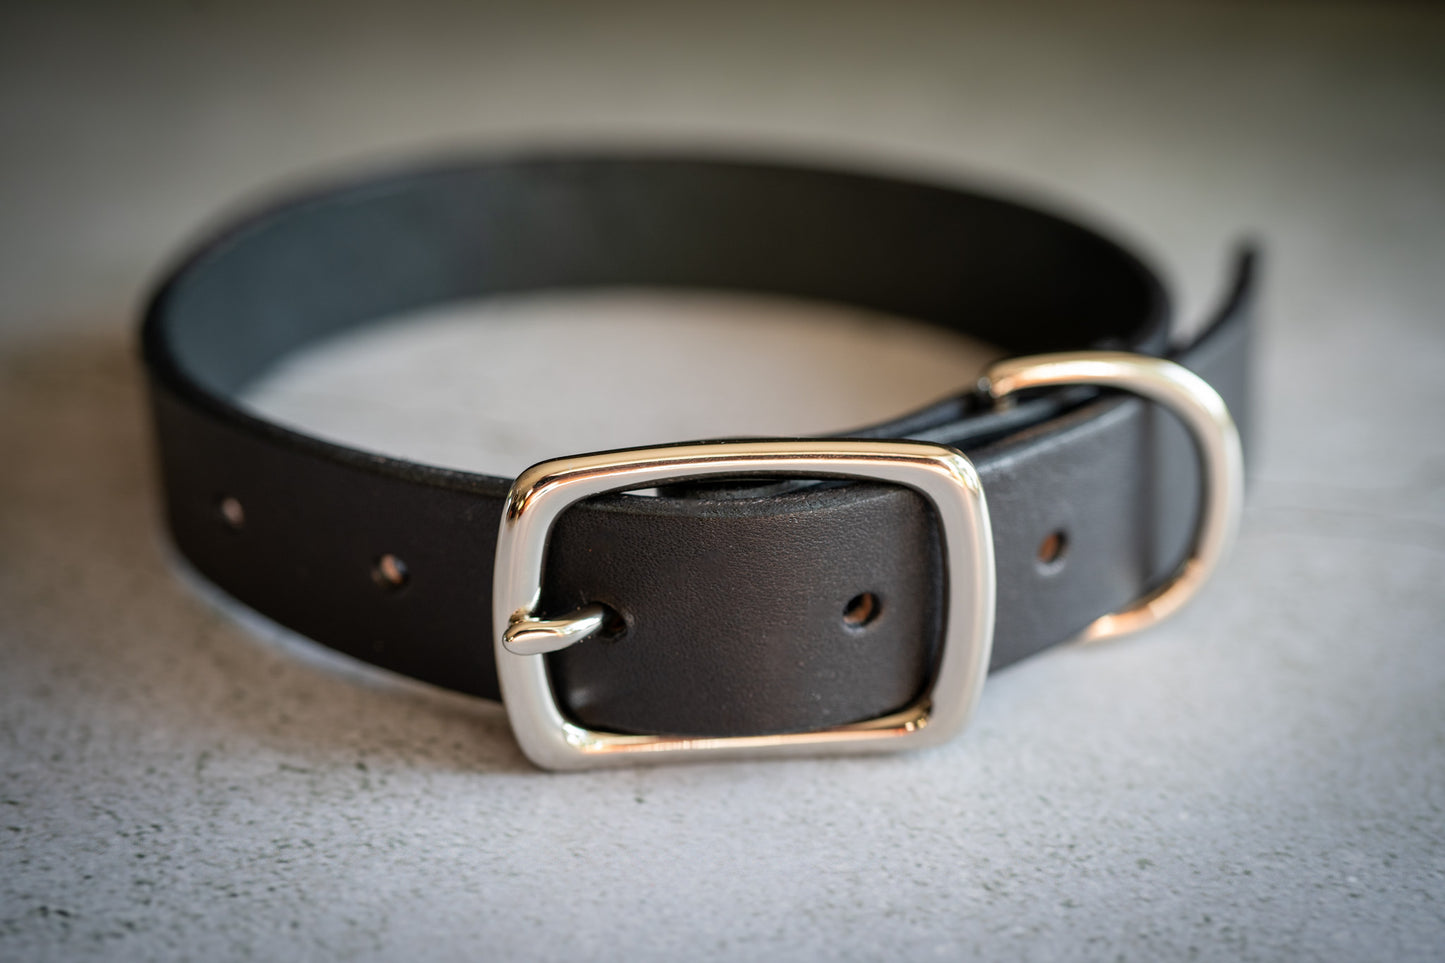 Black premium leather dog collar 1 inch with nickel brass buckle.